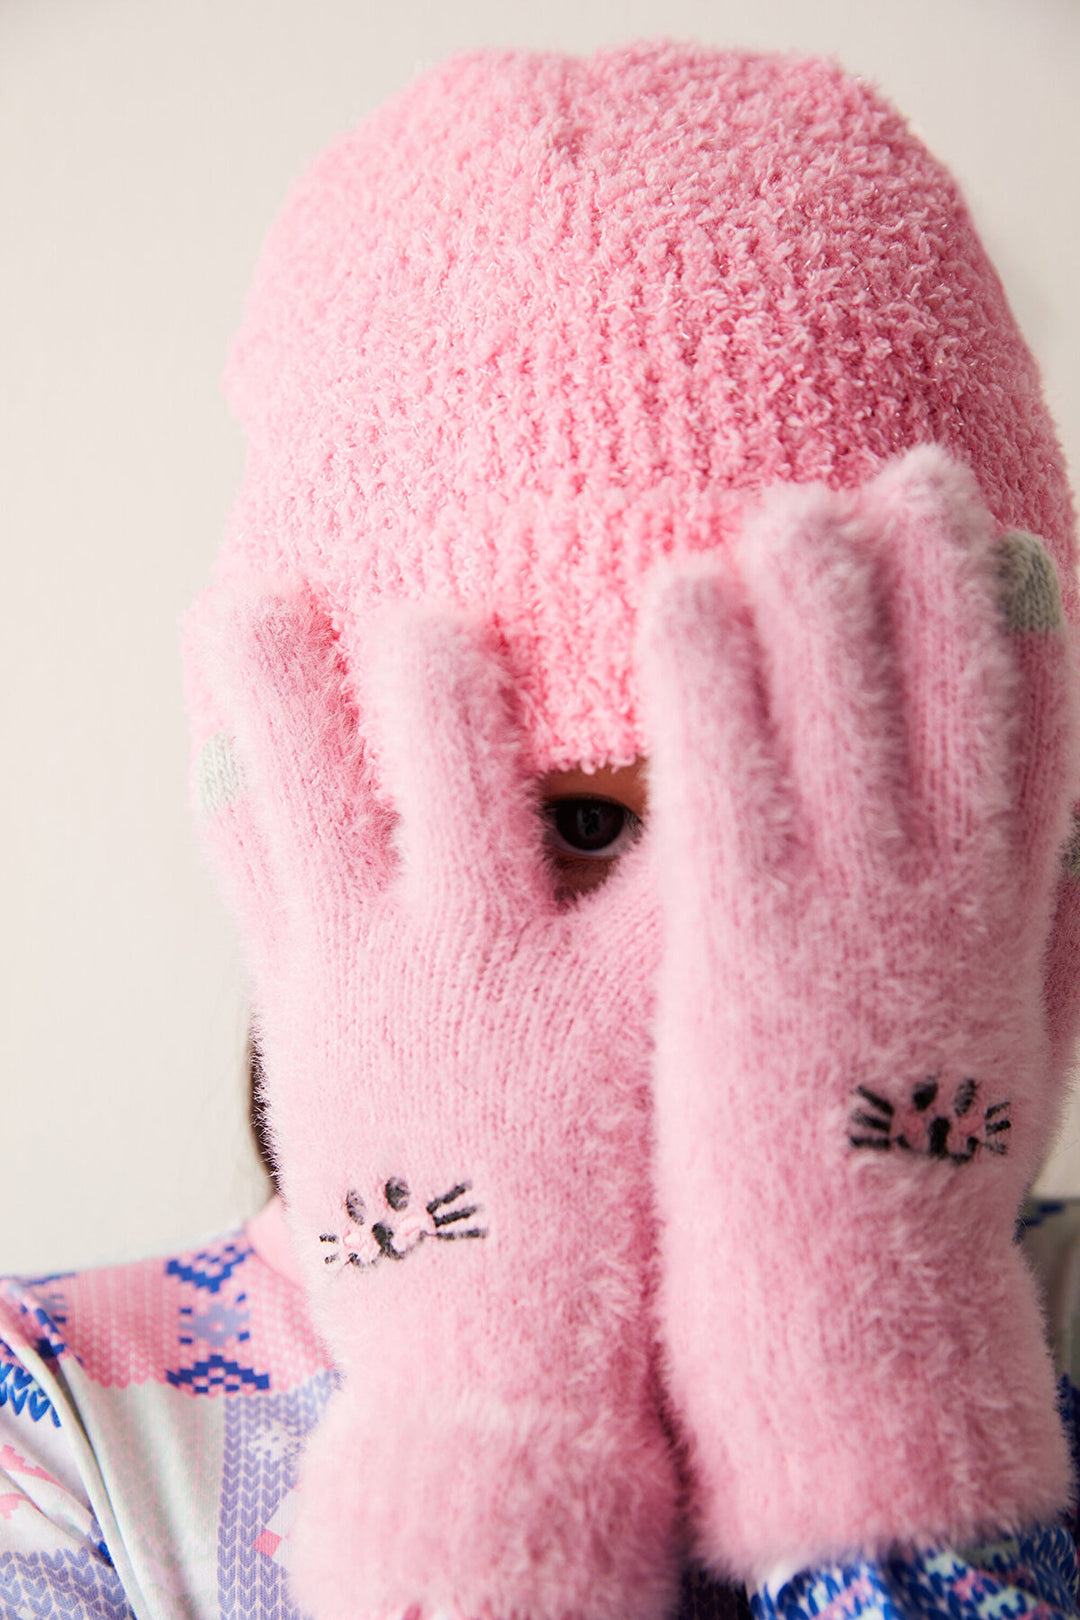 Girls Cat Patterned Pink Gloves